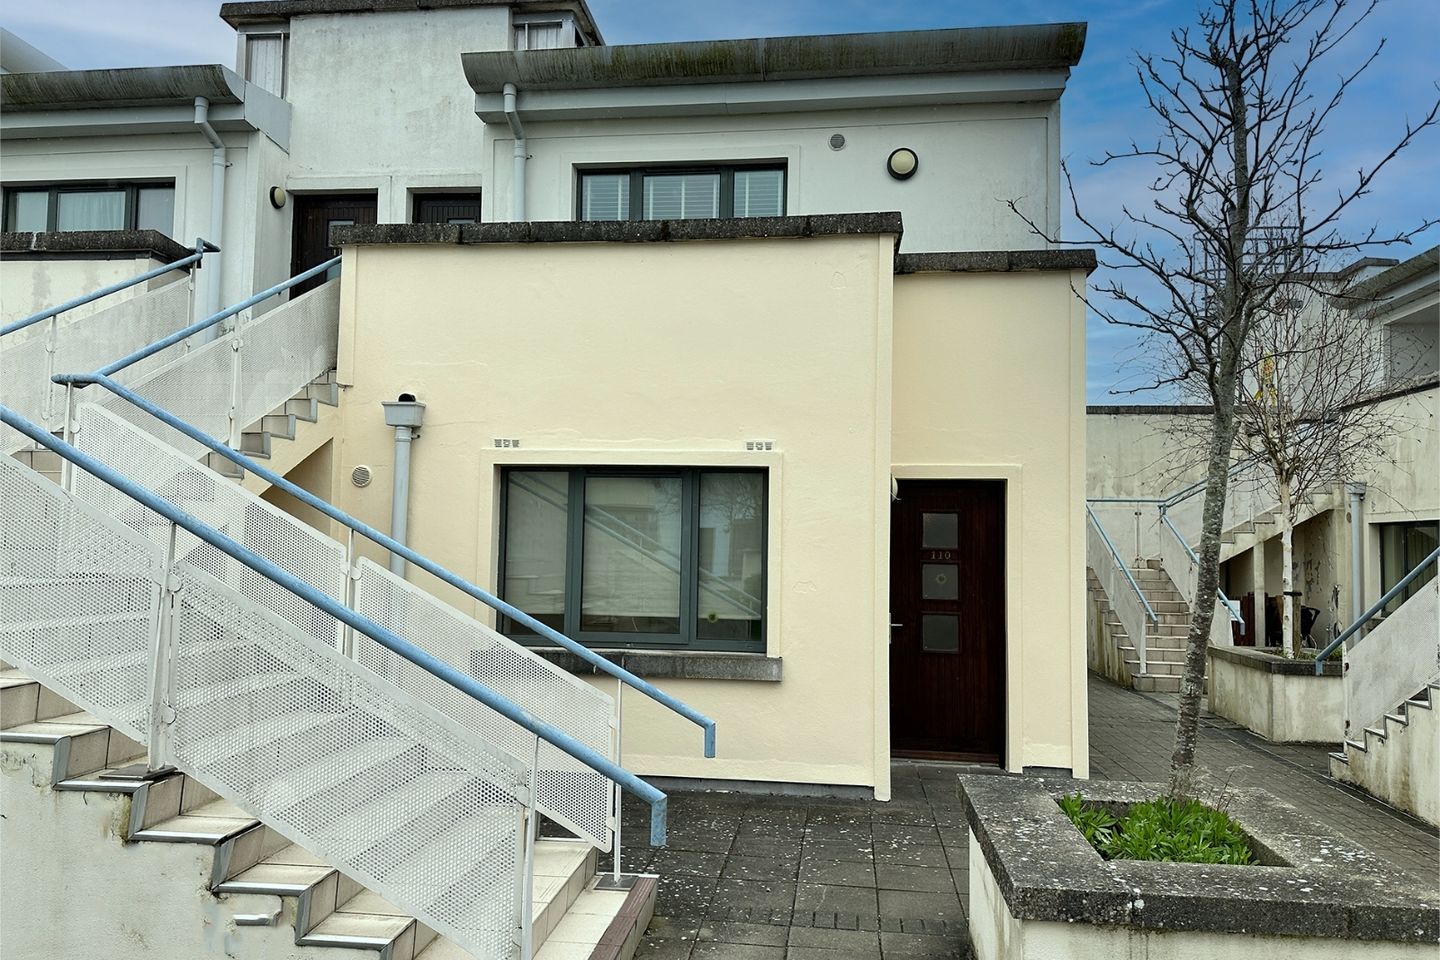 110 Station House, MacDonagh Junction, Kilkenny, Co. Kilkenny, R95VK11